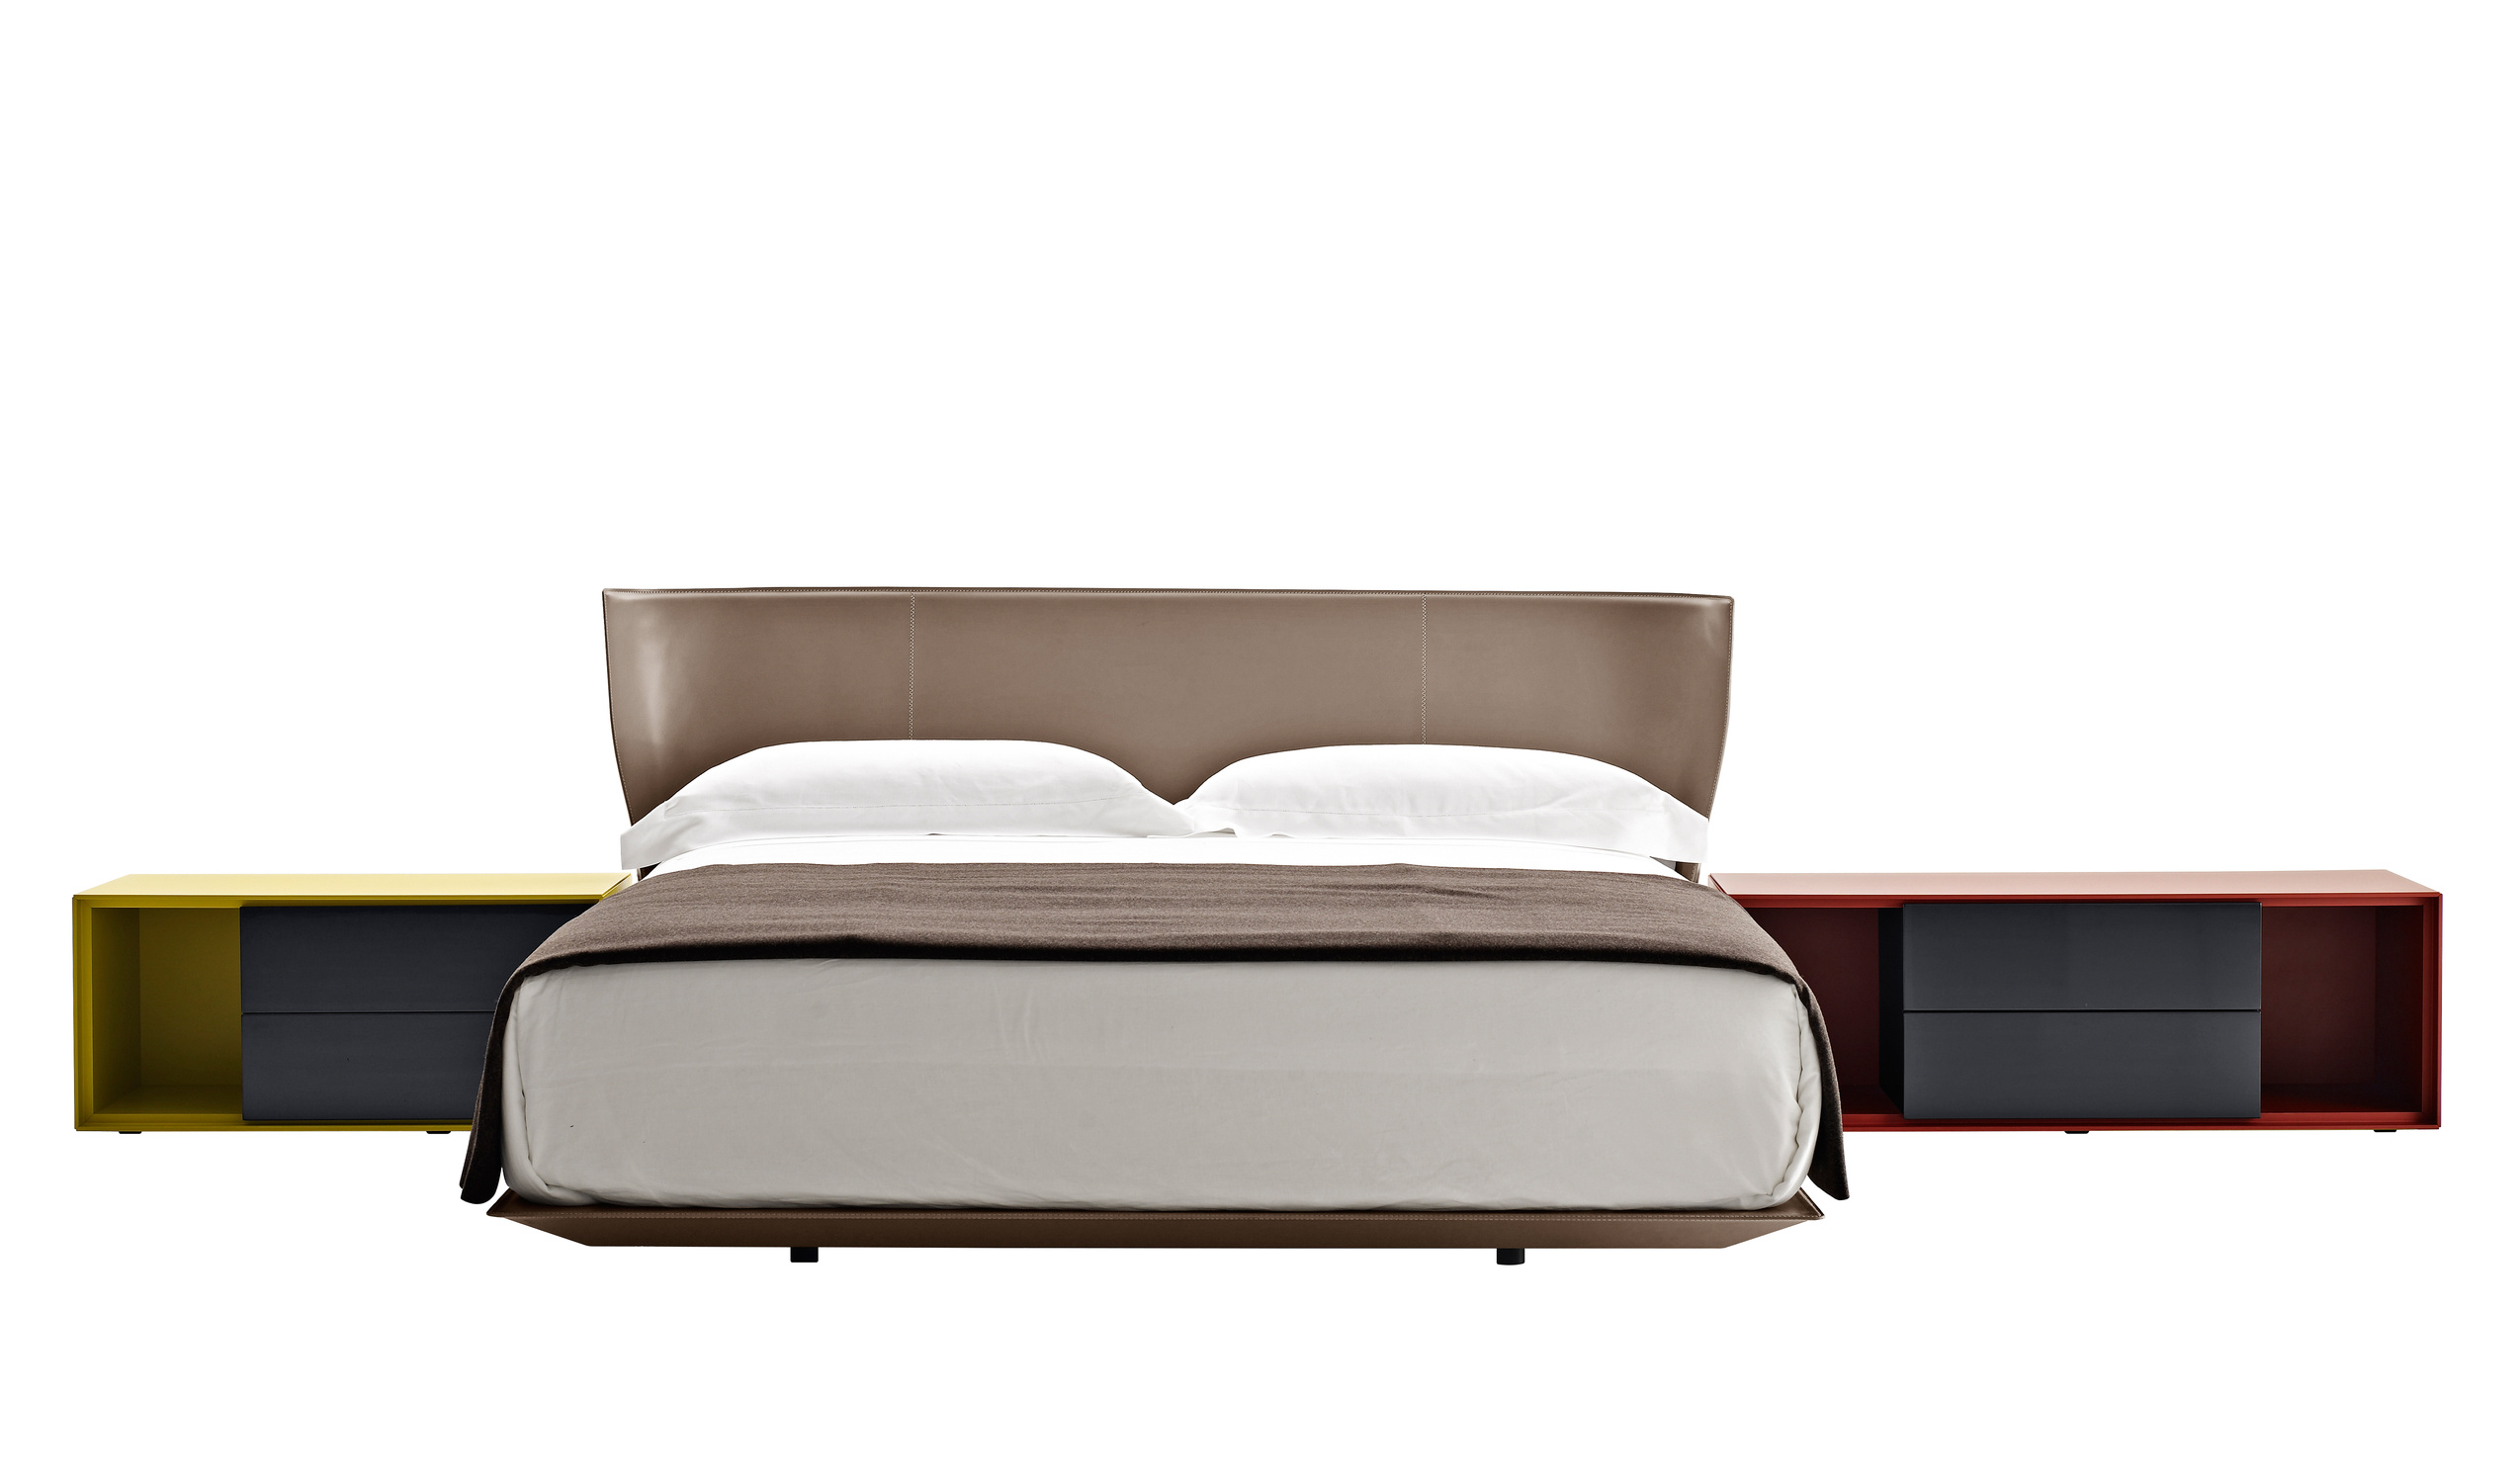 Designer Italian modern beds - Alys Beds 2